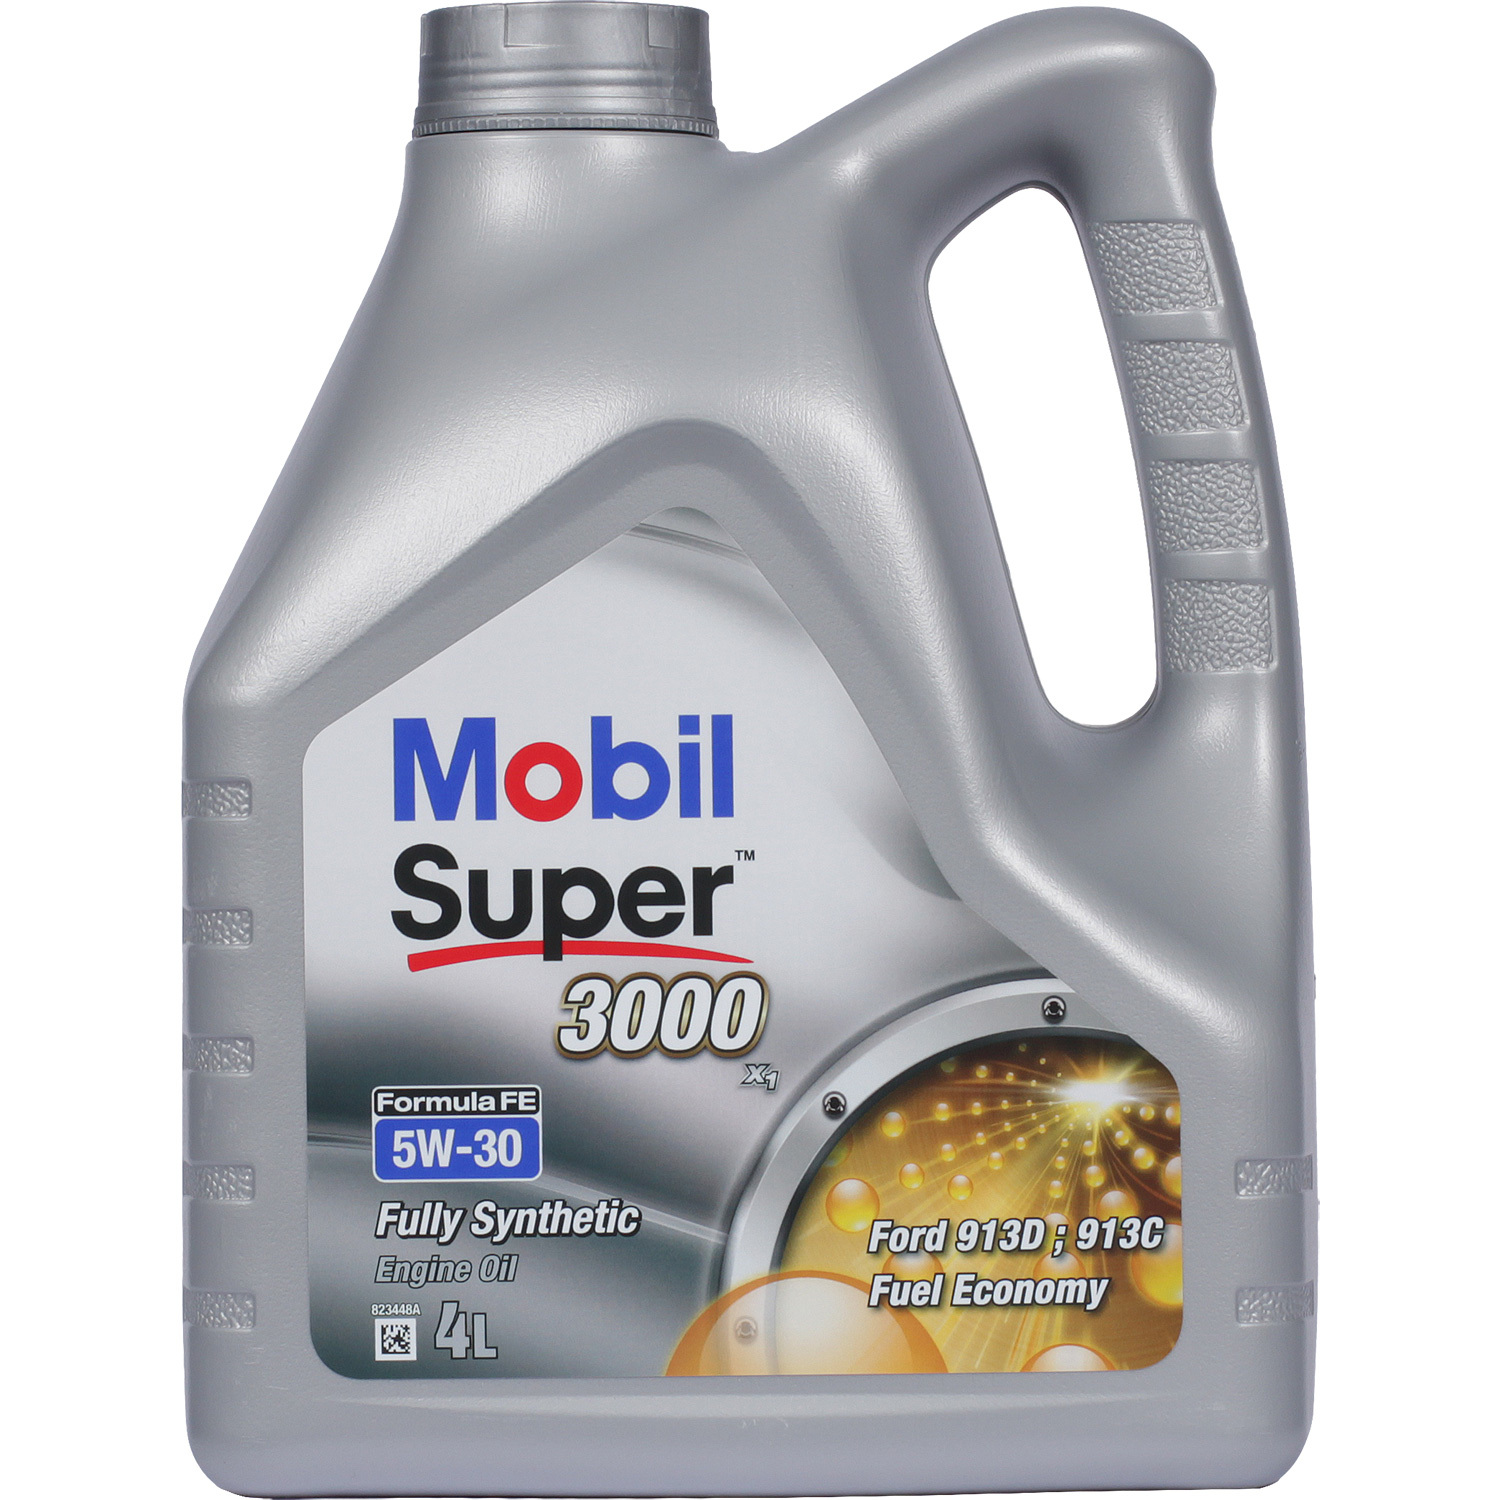 Mobil Моторное масло Mobil Super 3000 X1 Formula FE 5W-30, 4 л масло моторное mobil super 3000 5w40 синтетическое 4 л